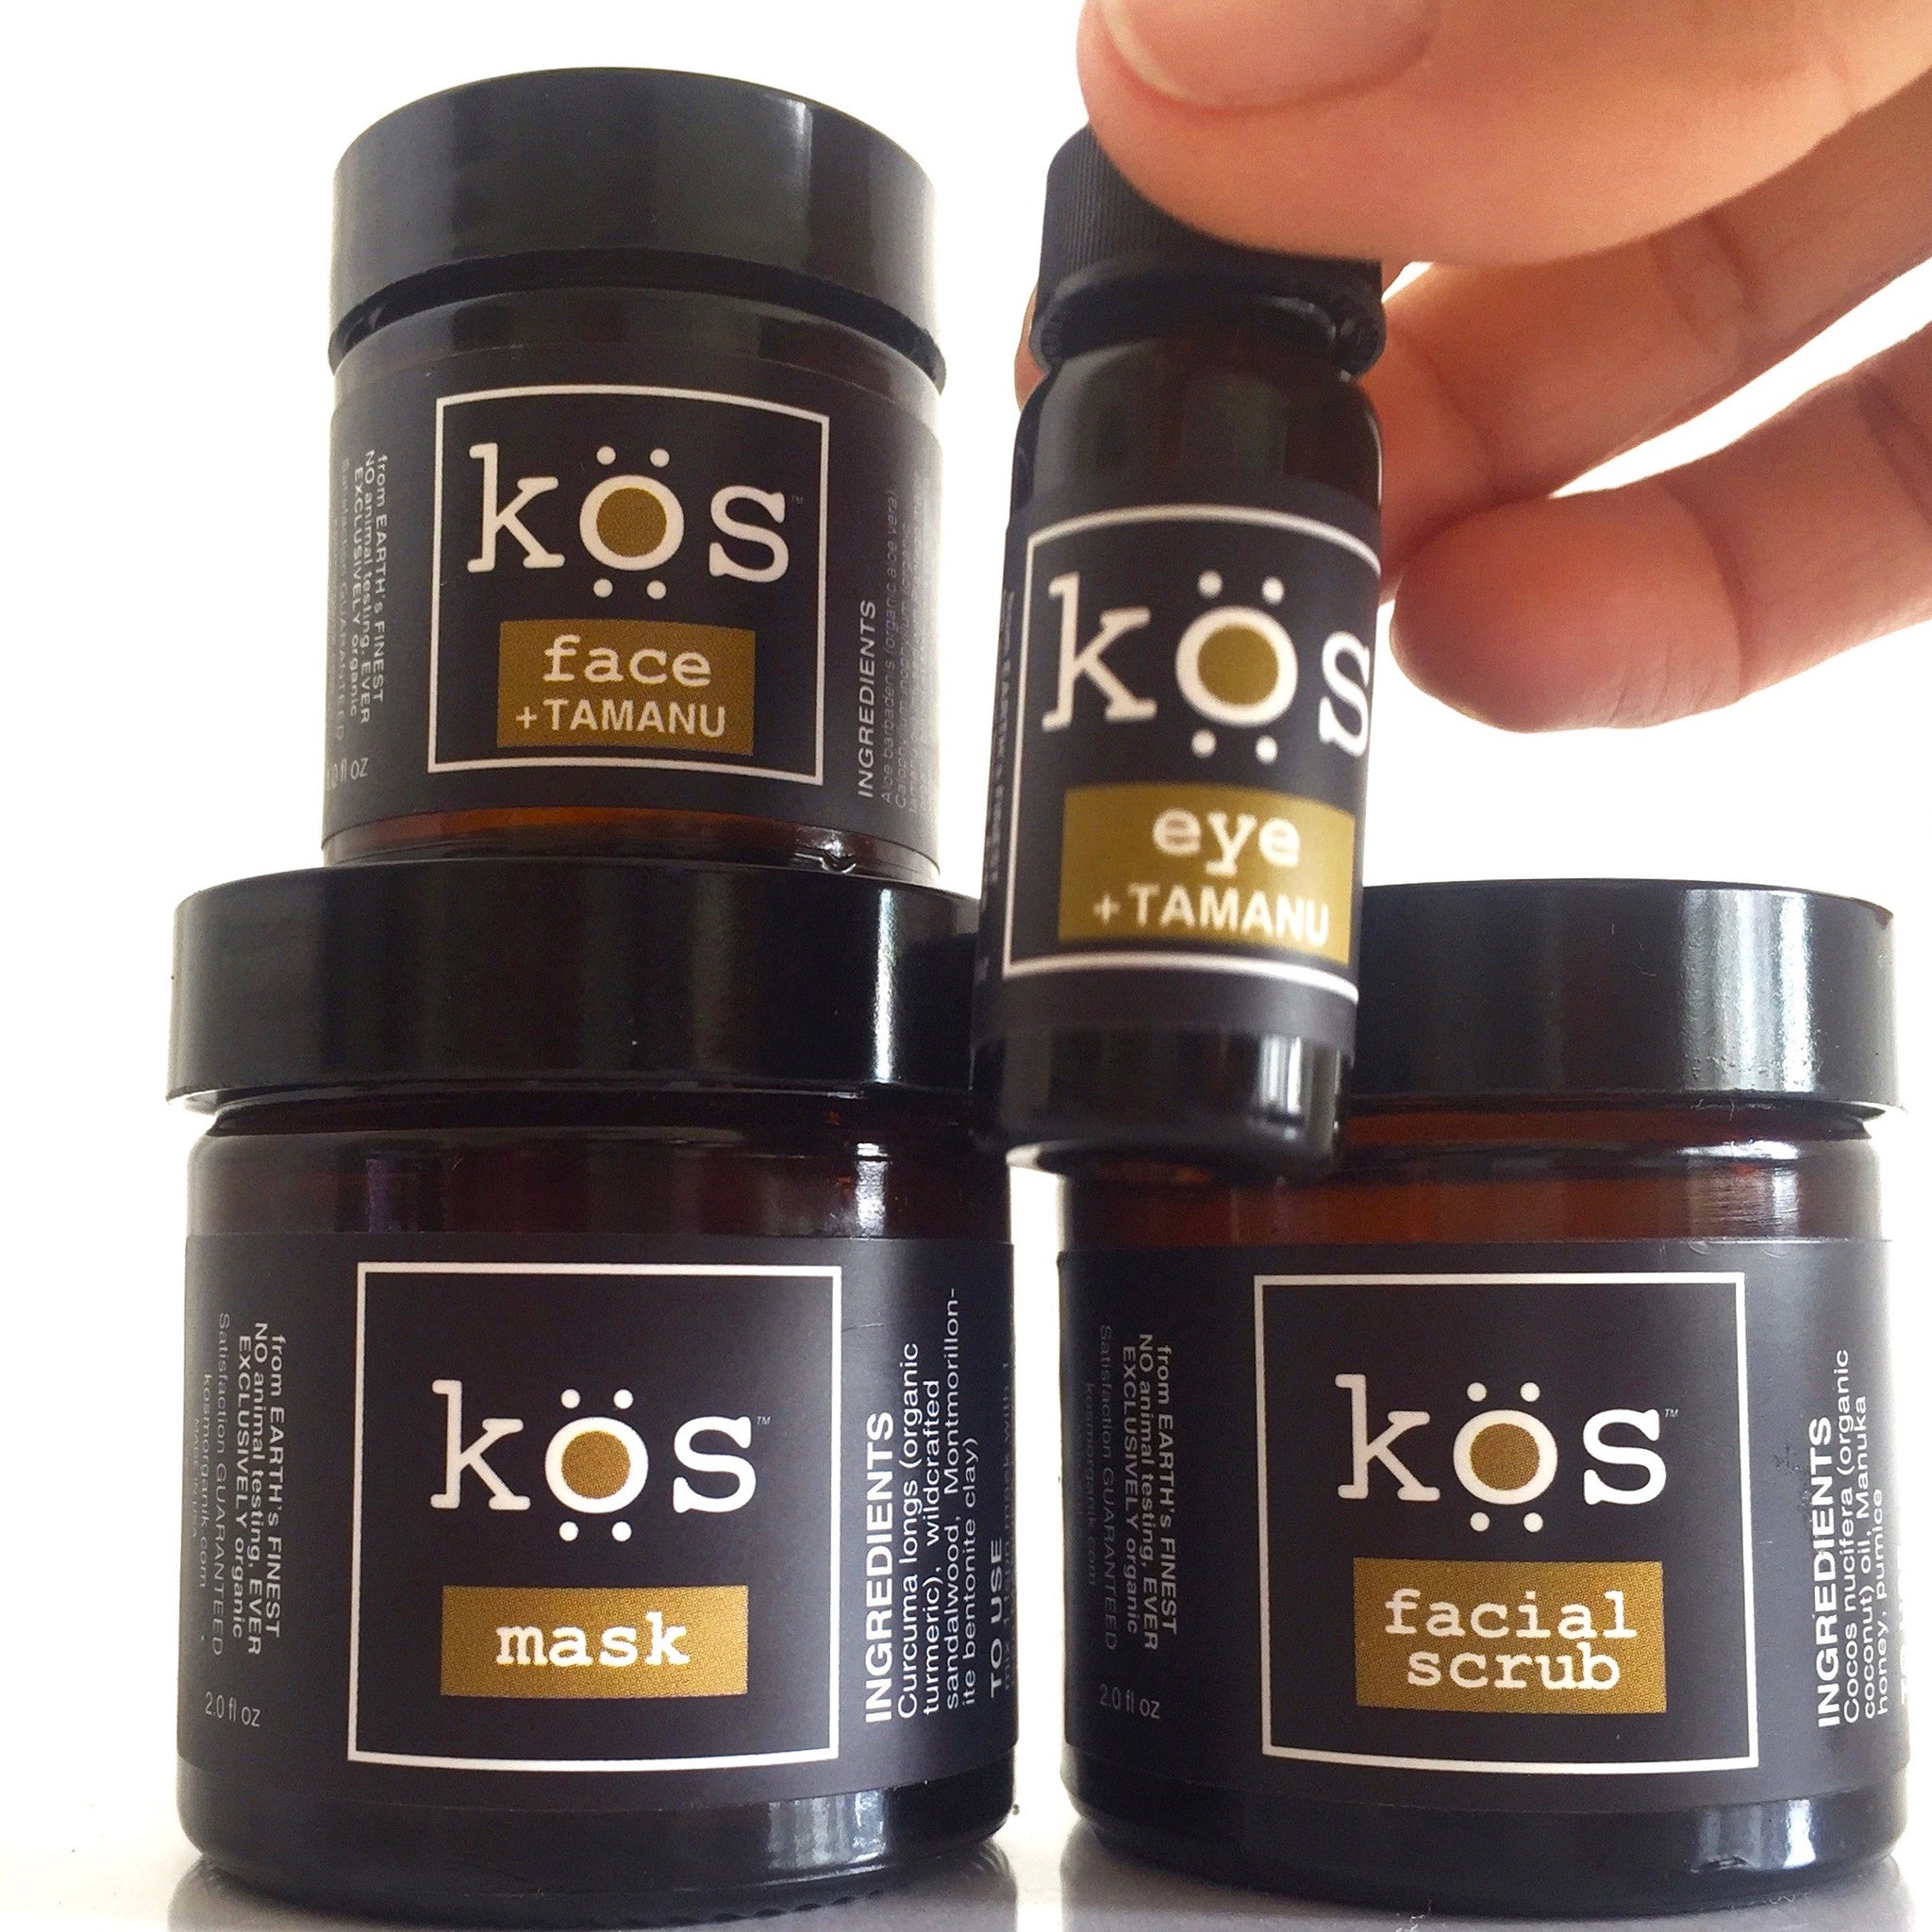 Kos Organic Skincare The Home Of Premium Organic Wellness Products